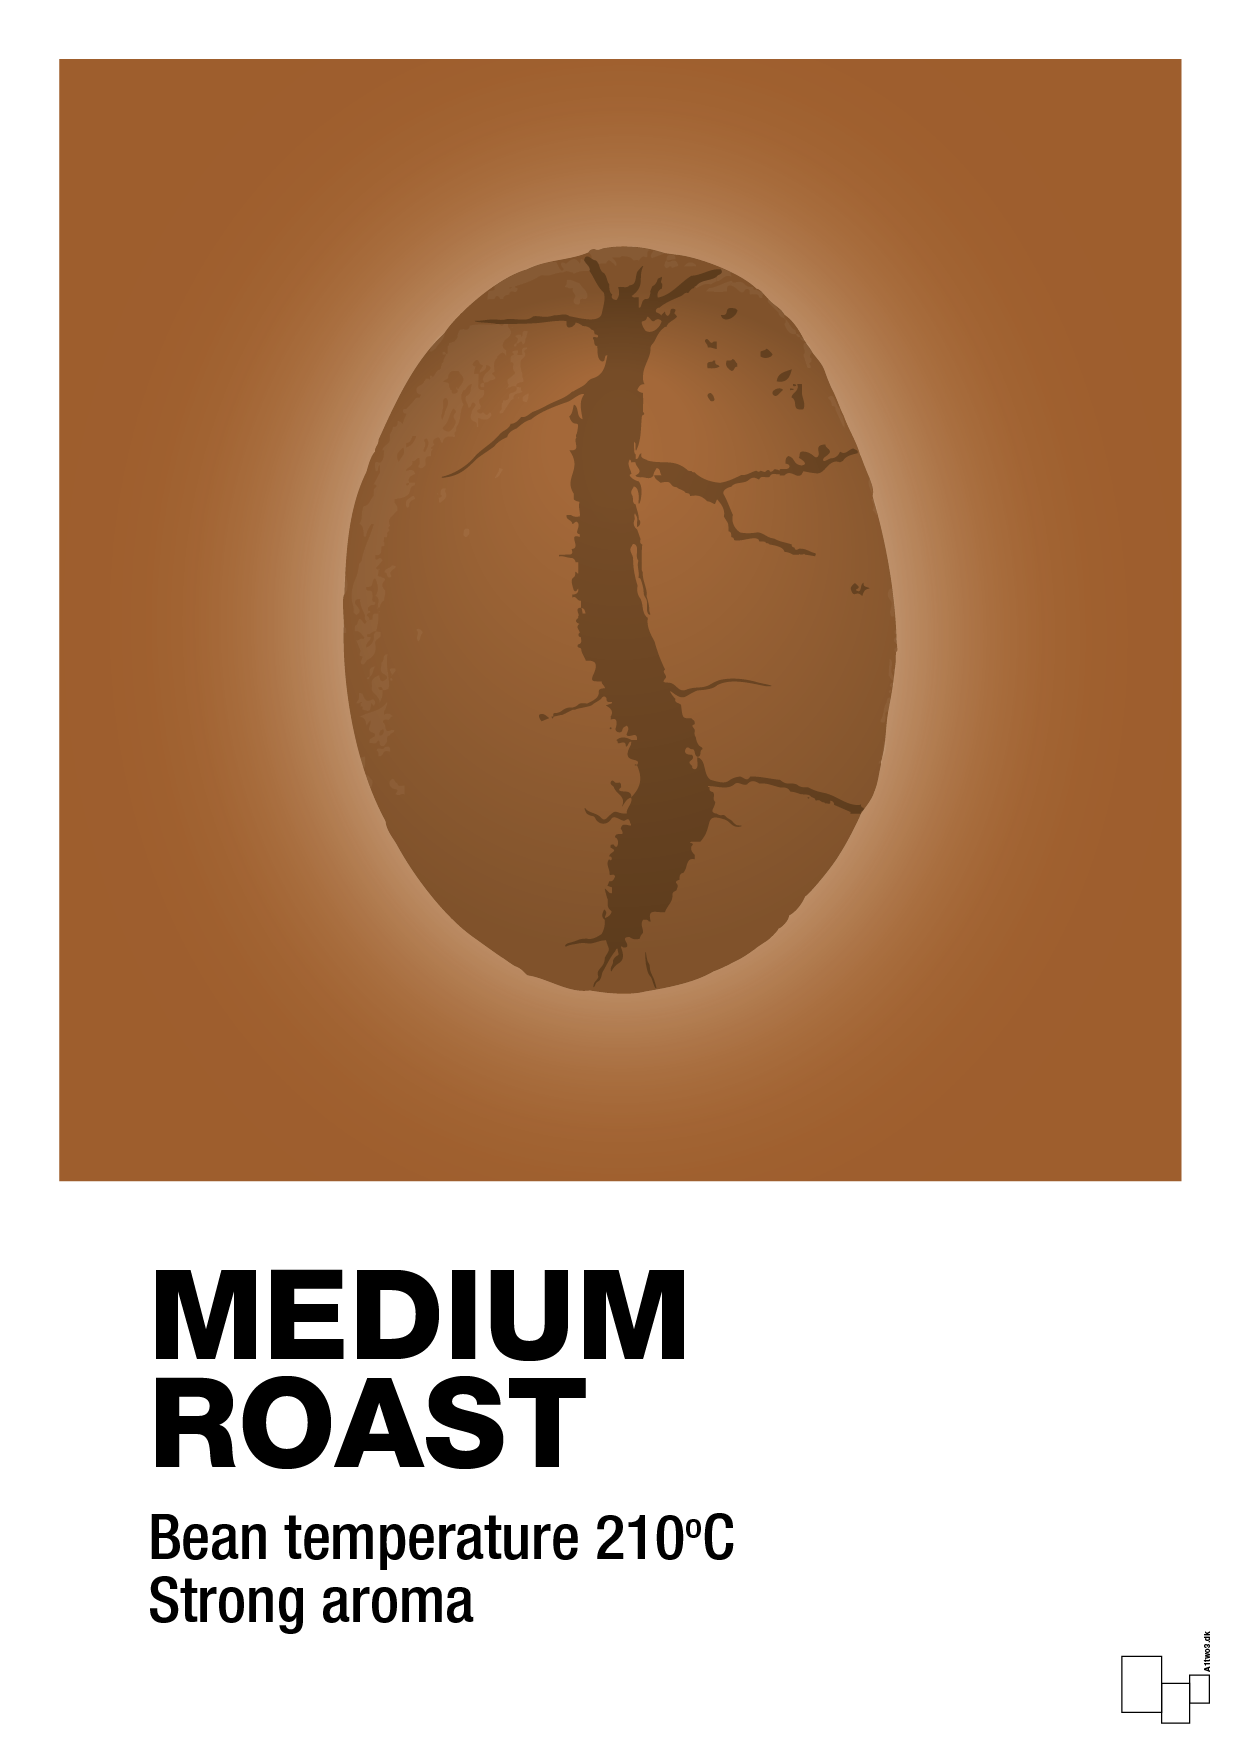 medium roast - Plakat med Mad & Drikke i Cognac